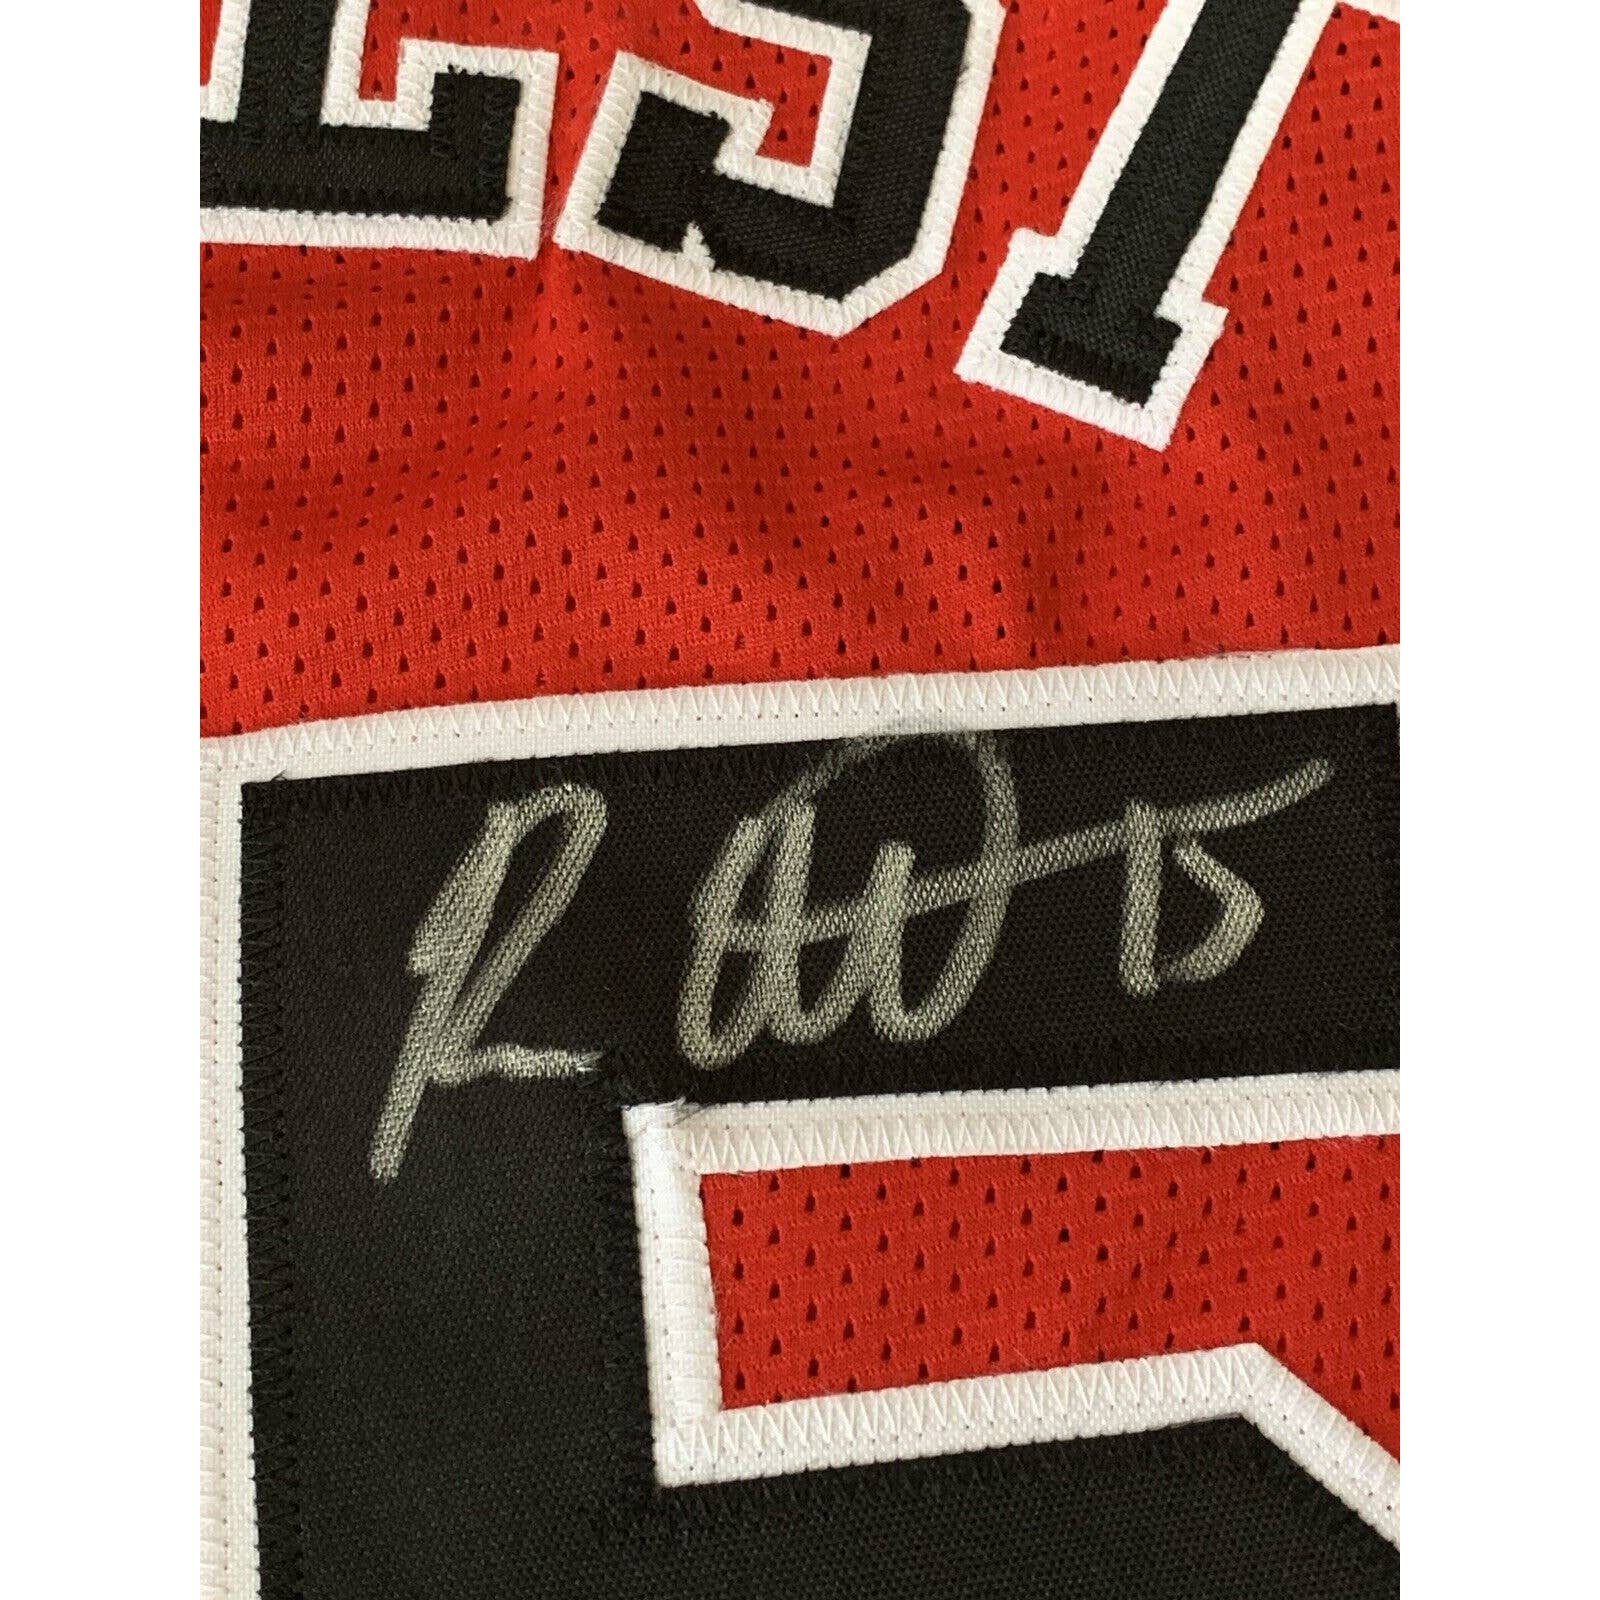 Ron Artest Autographed/Signed Jersey COA Chicago Bulls Metta World Peace - TreasuresEvolved